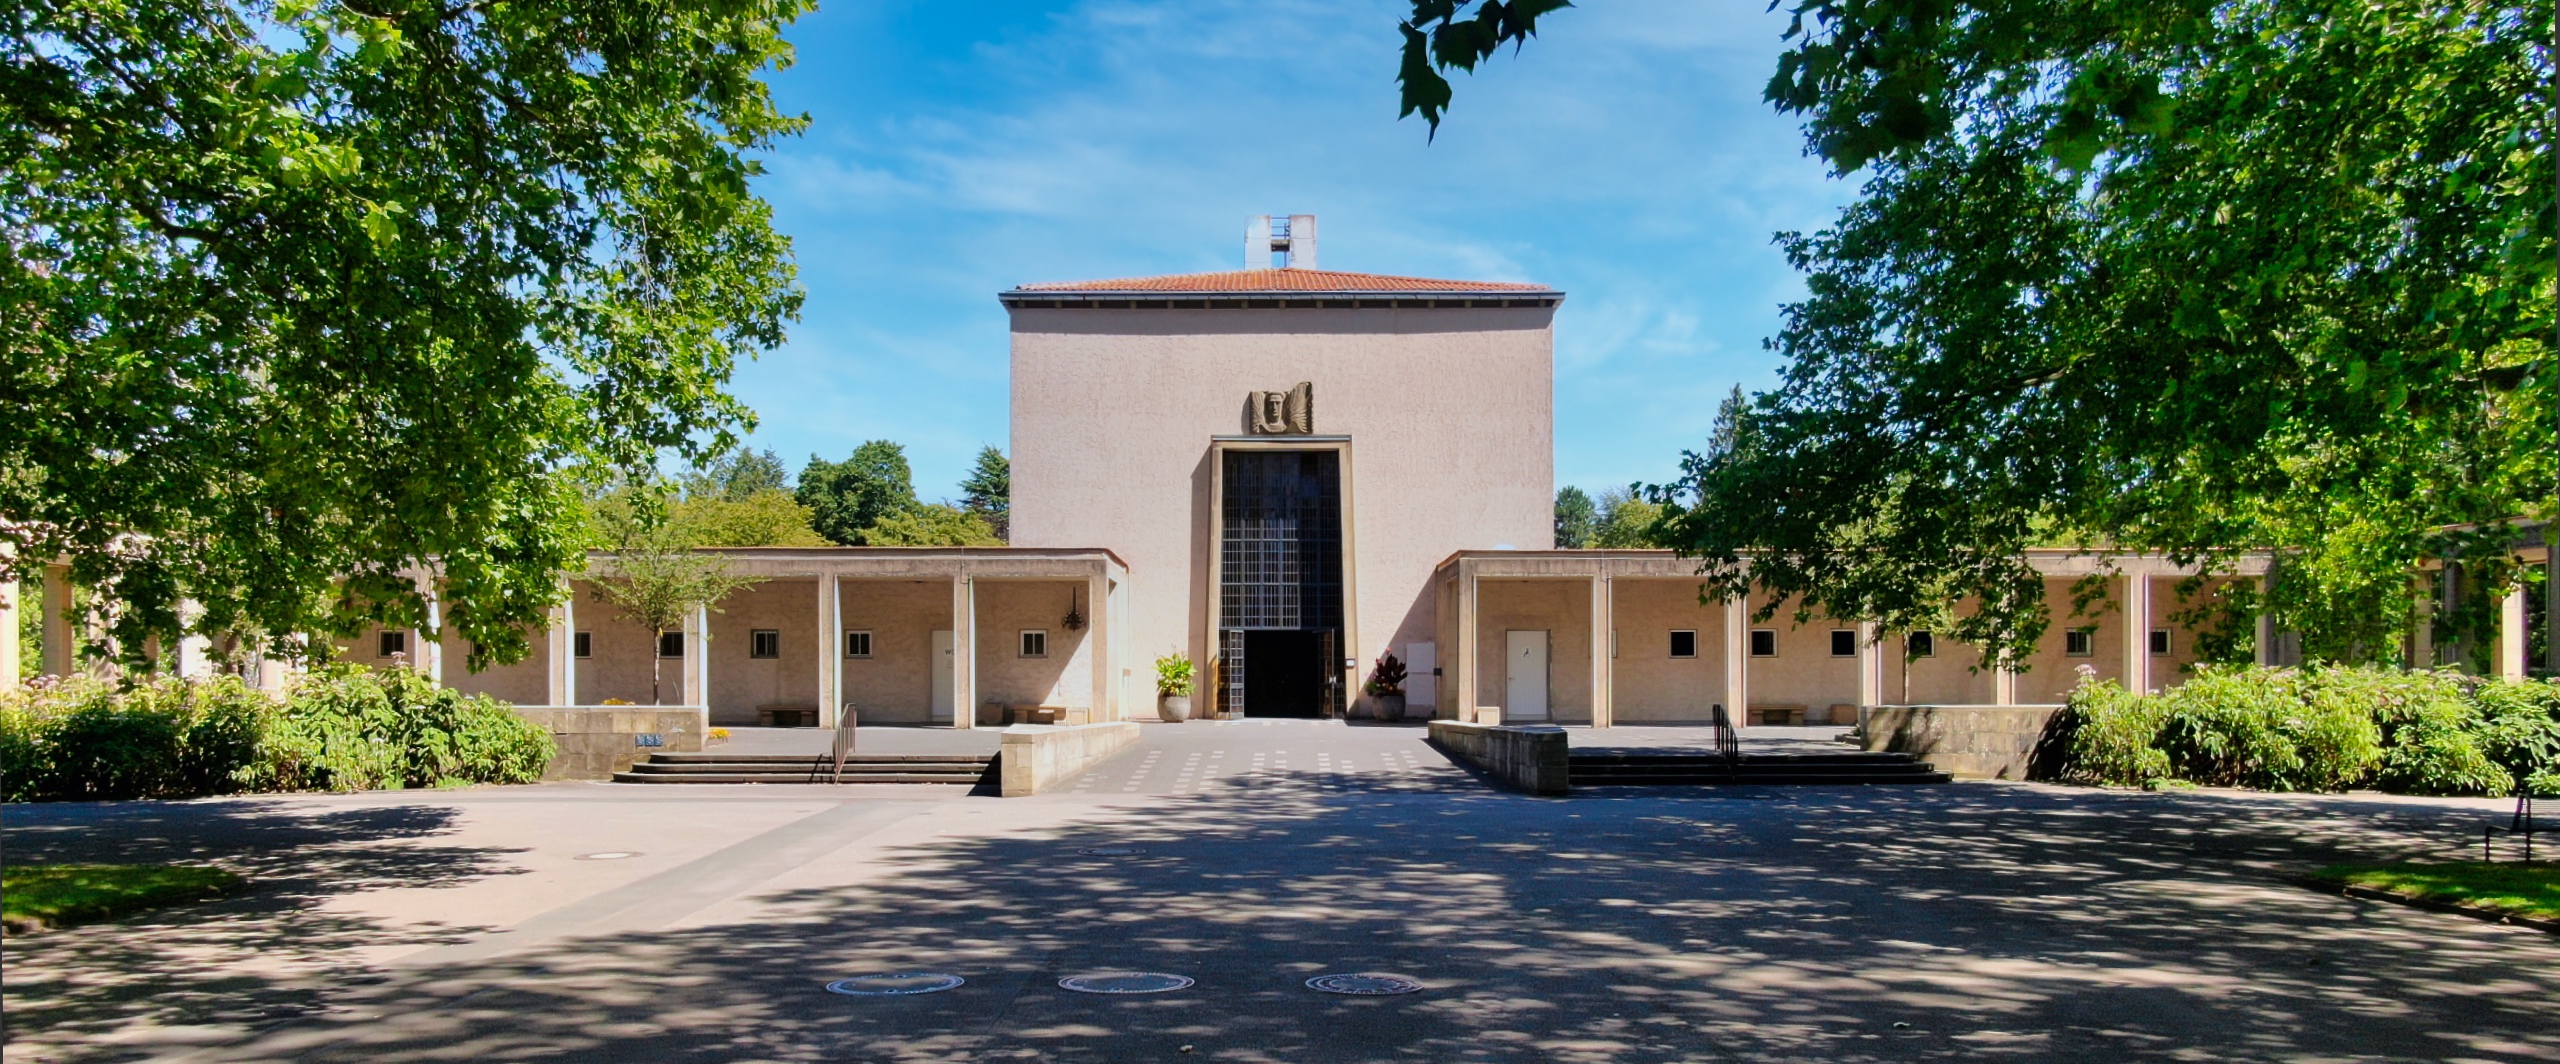 Krematorium Köln